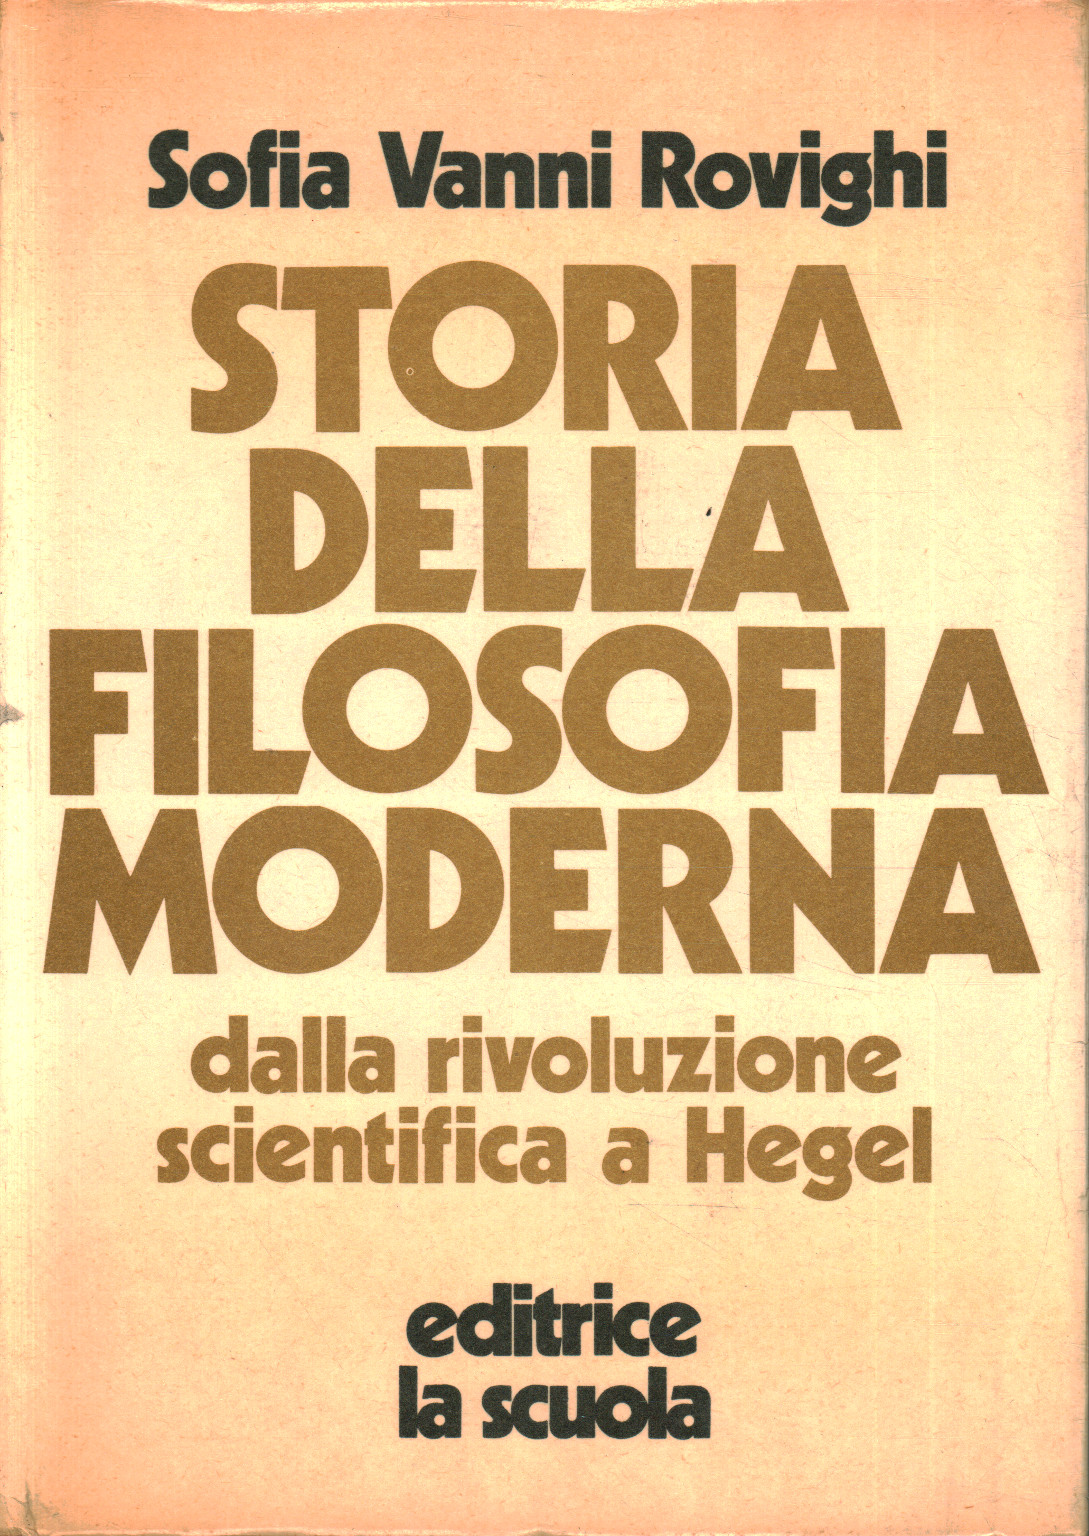 Historia de la filosofía moderna, Sofia Vanni Rovighi